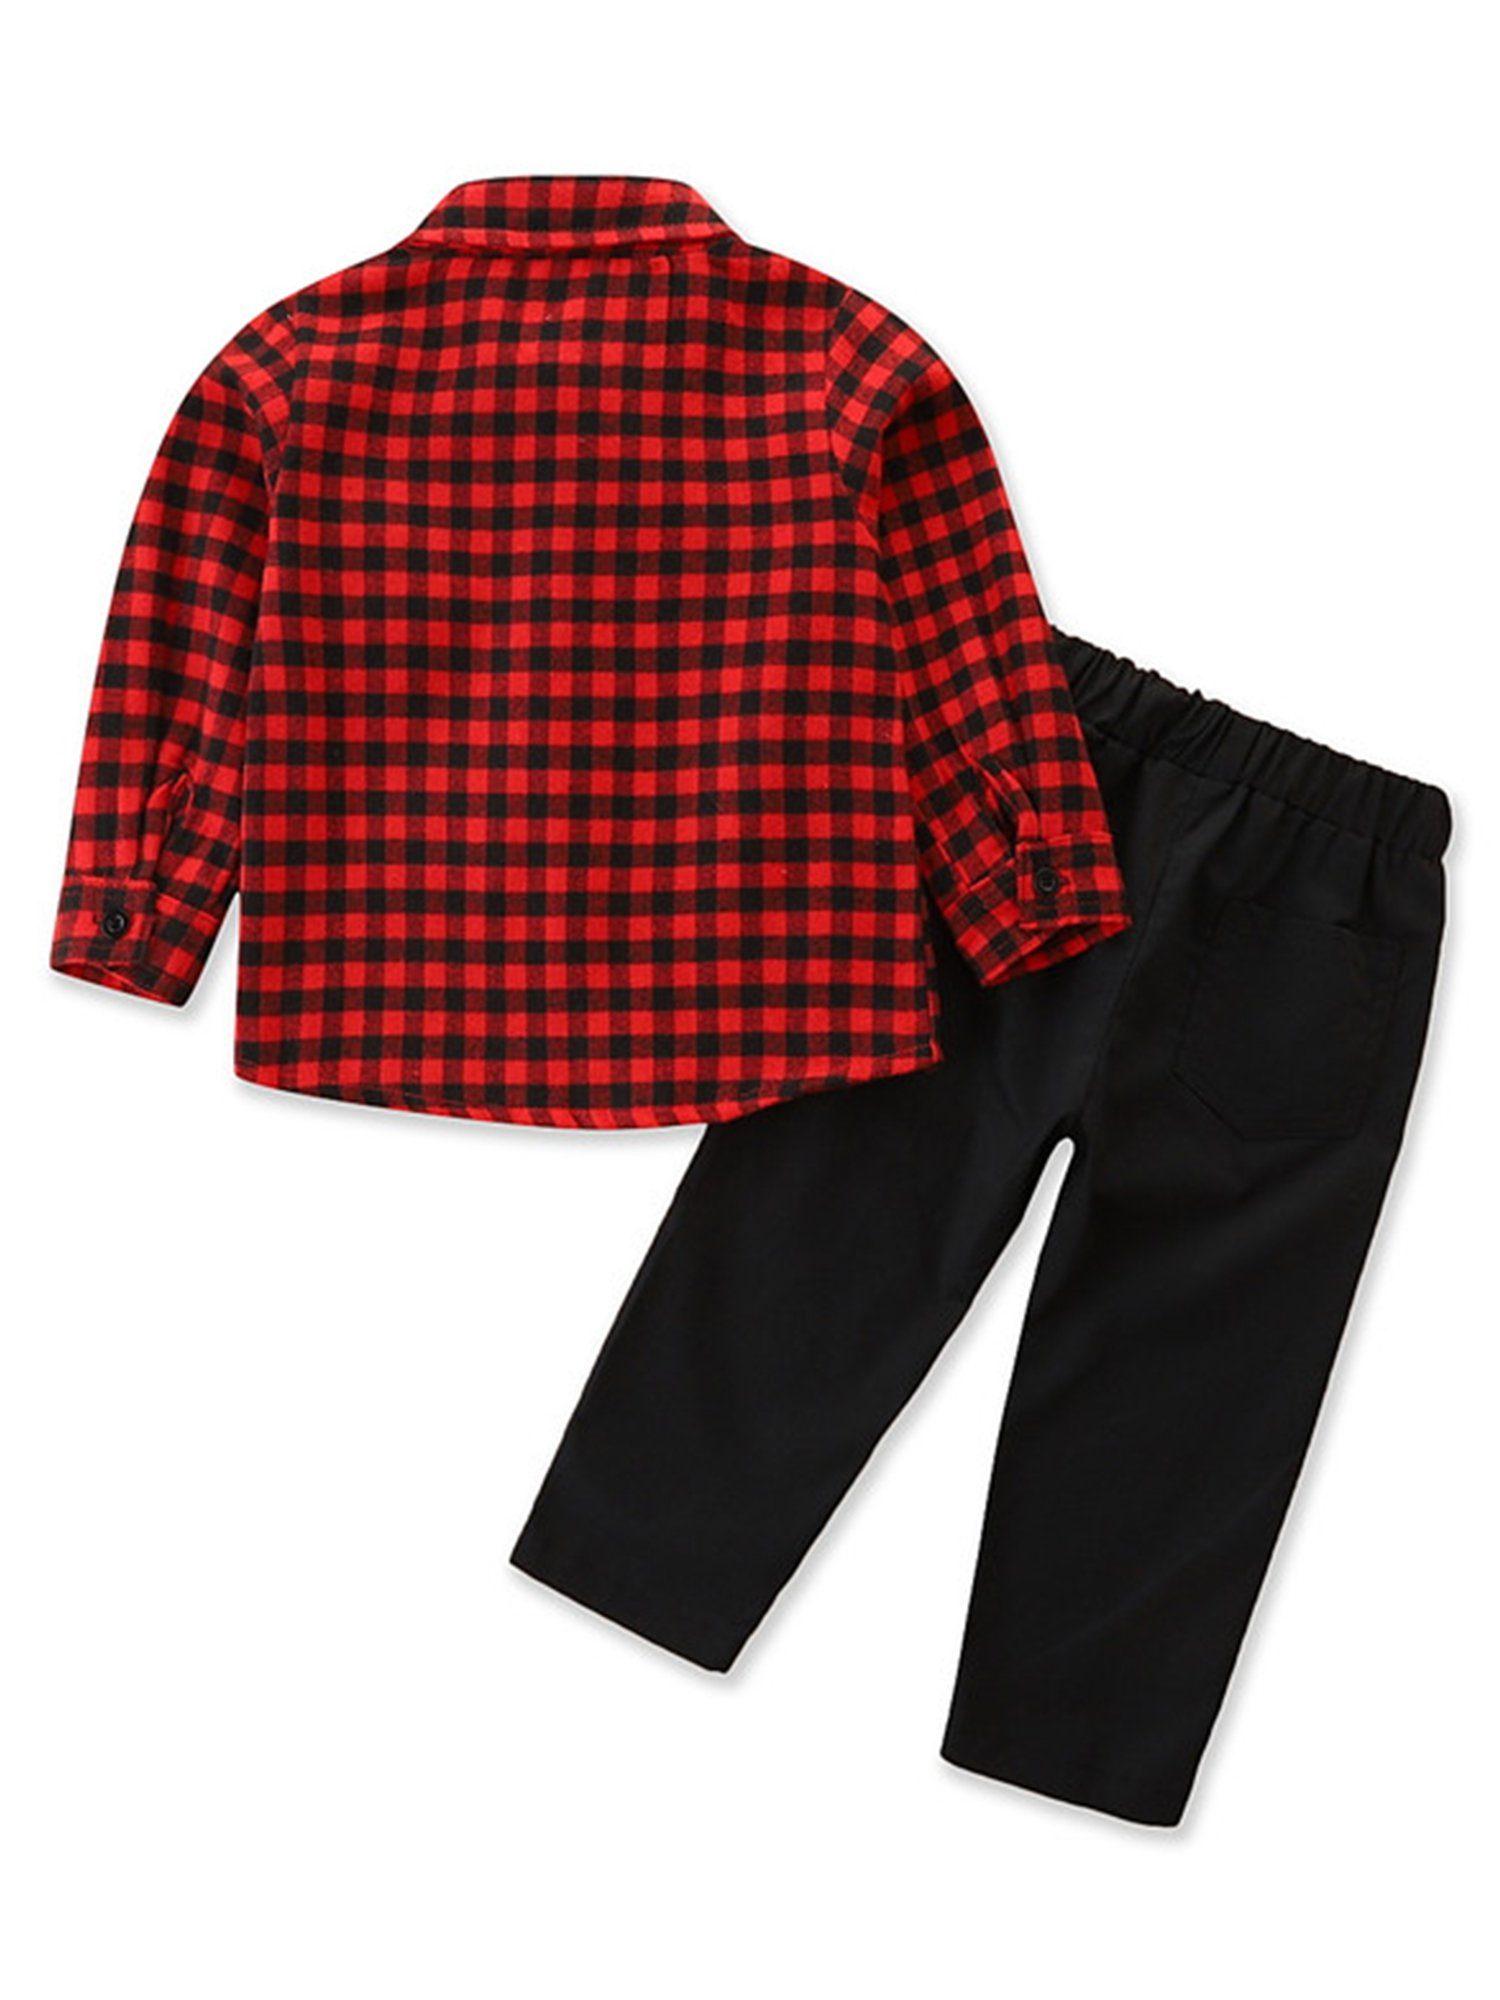 LAPA Shirt & Hose »Rot-schwarz kariertes Hemd + Stretchhose, 100% Baumwolle«